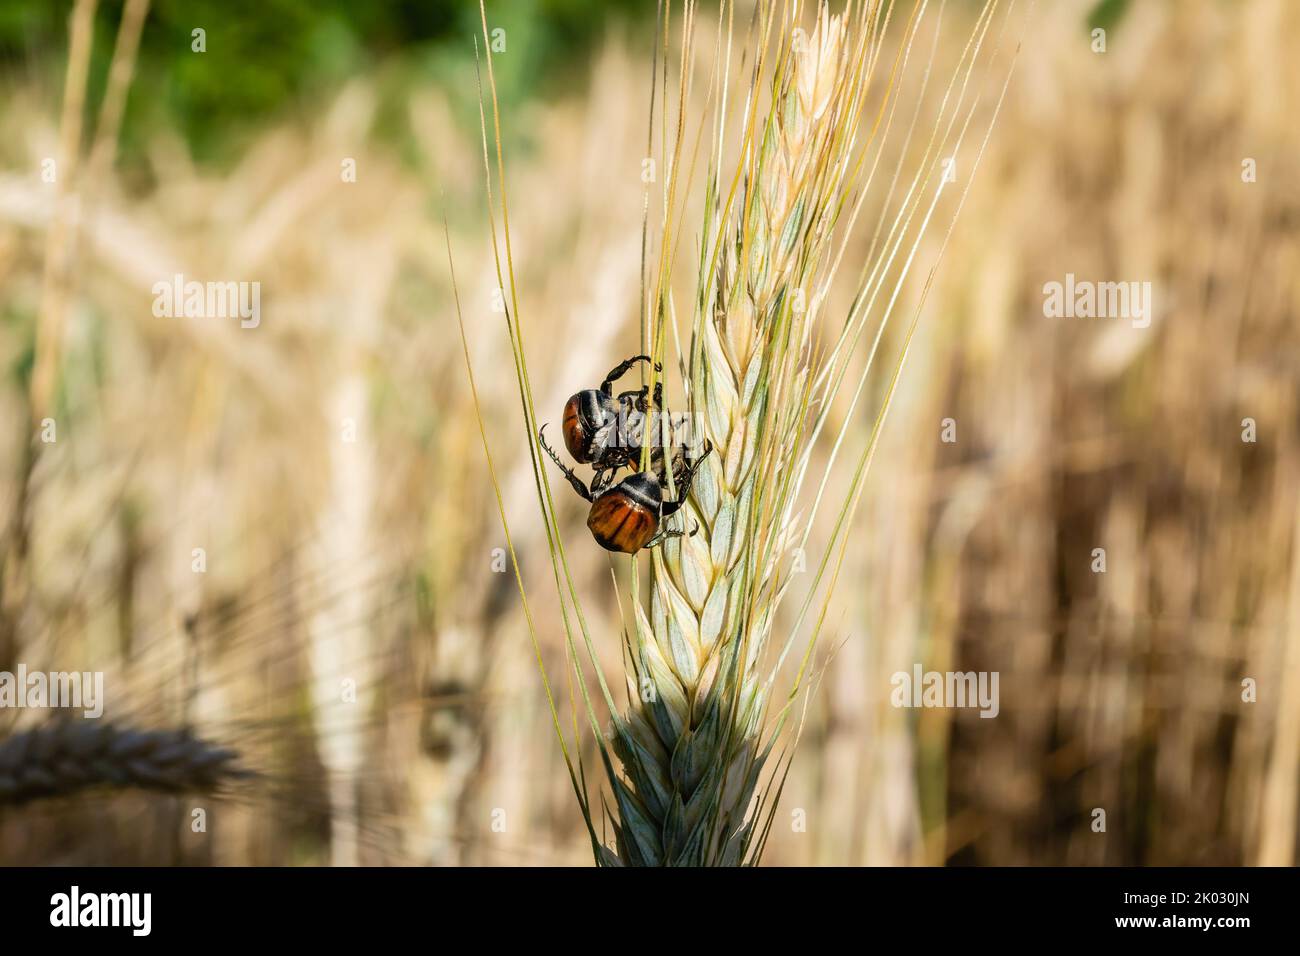 A close-up shot of Anisoplia austriacas on a wheat ear in the field Stock Photo